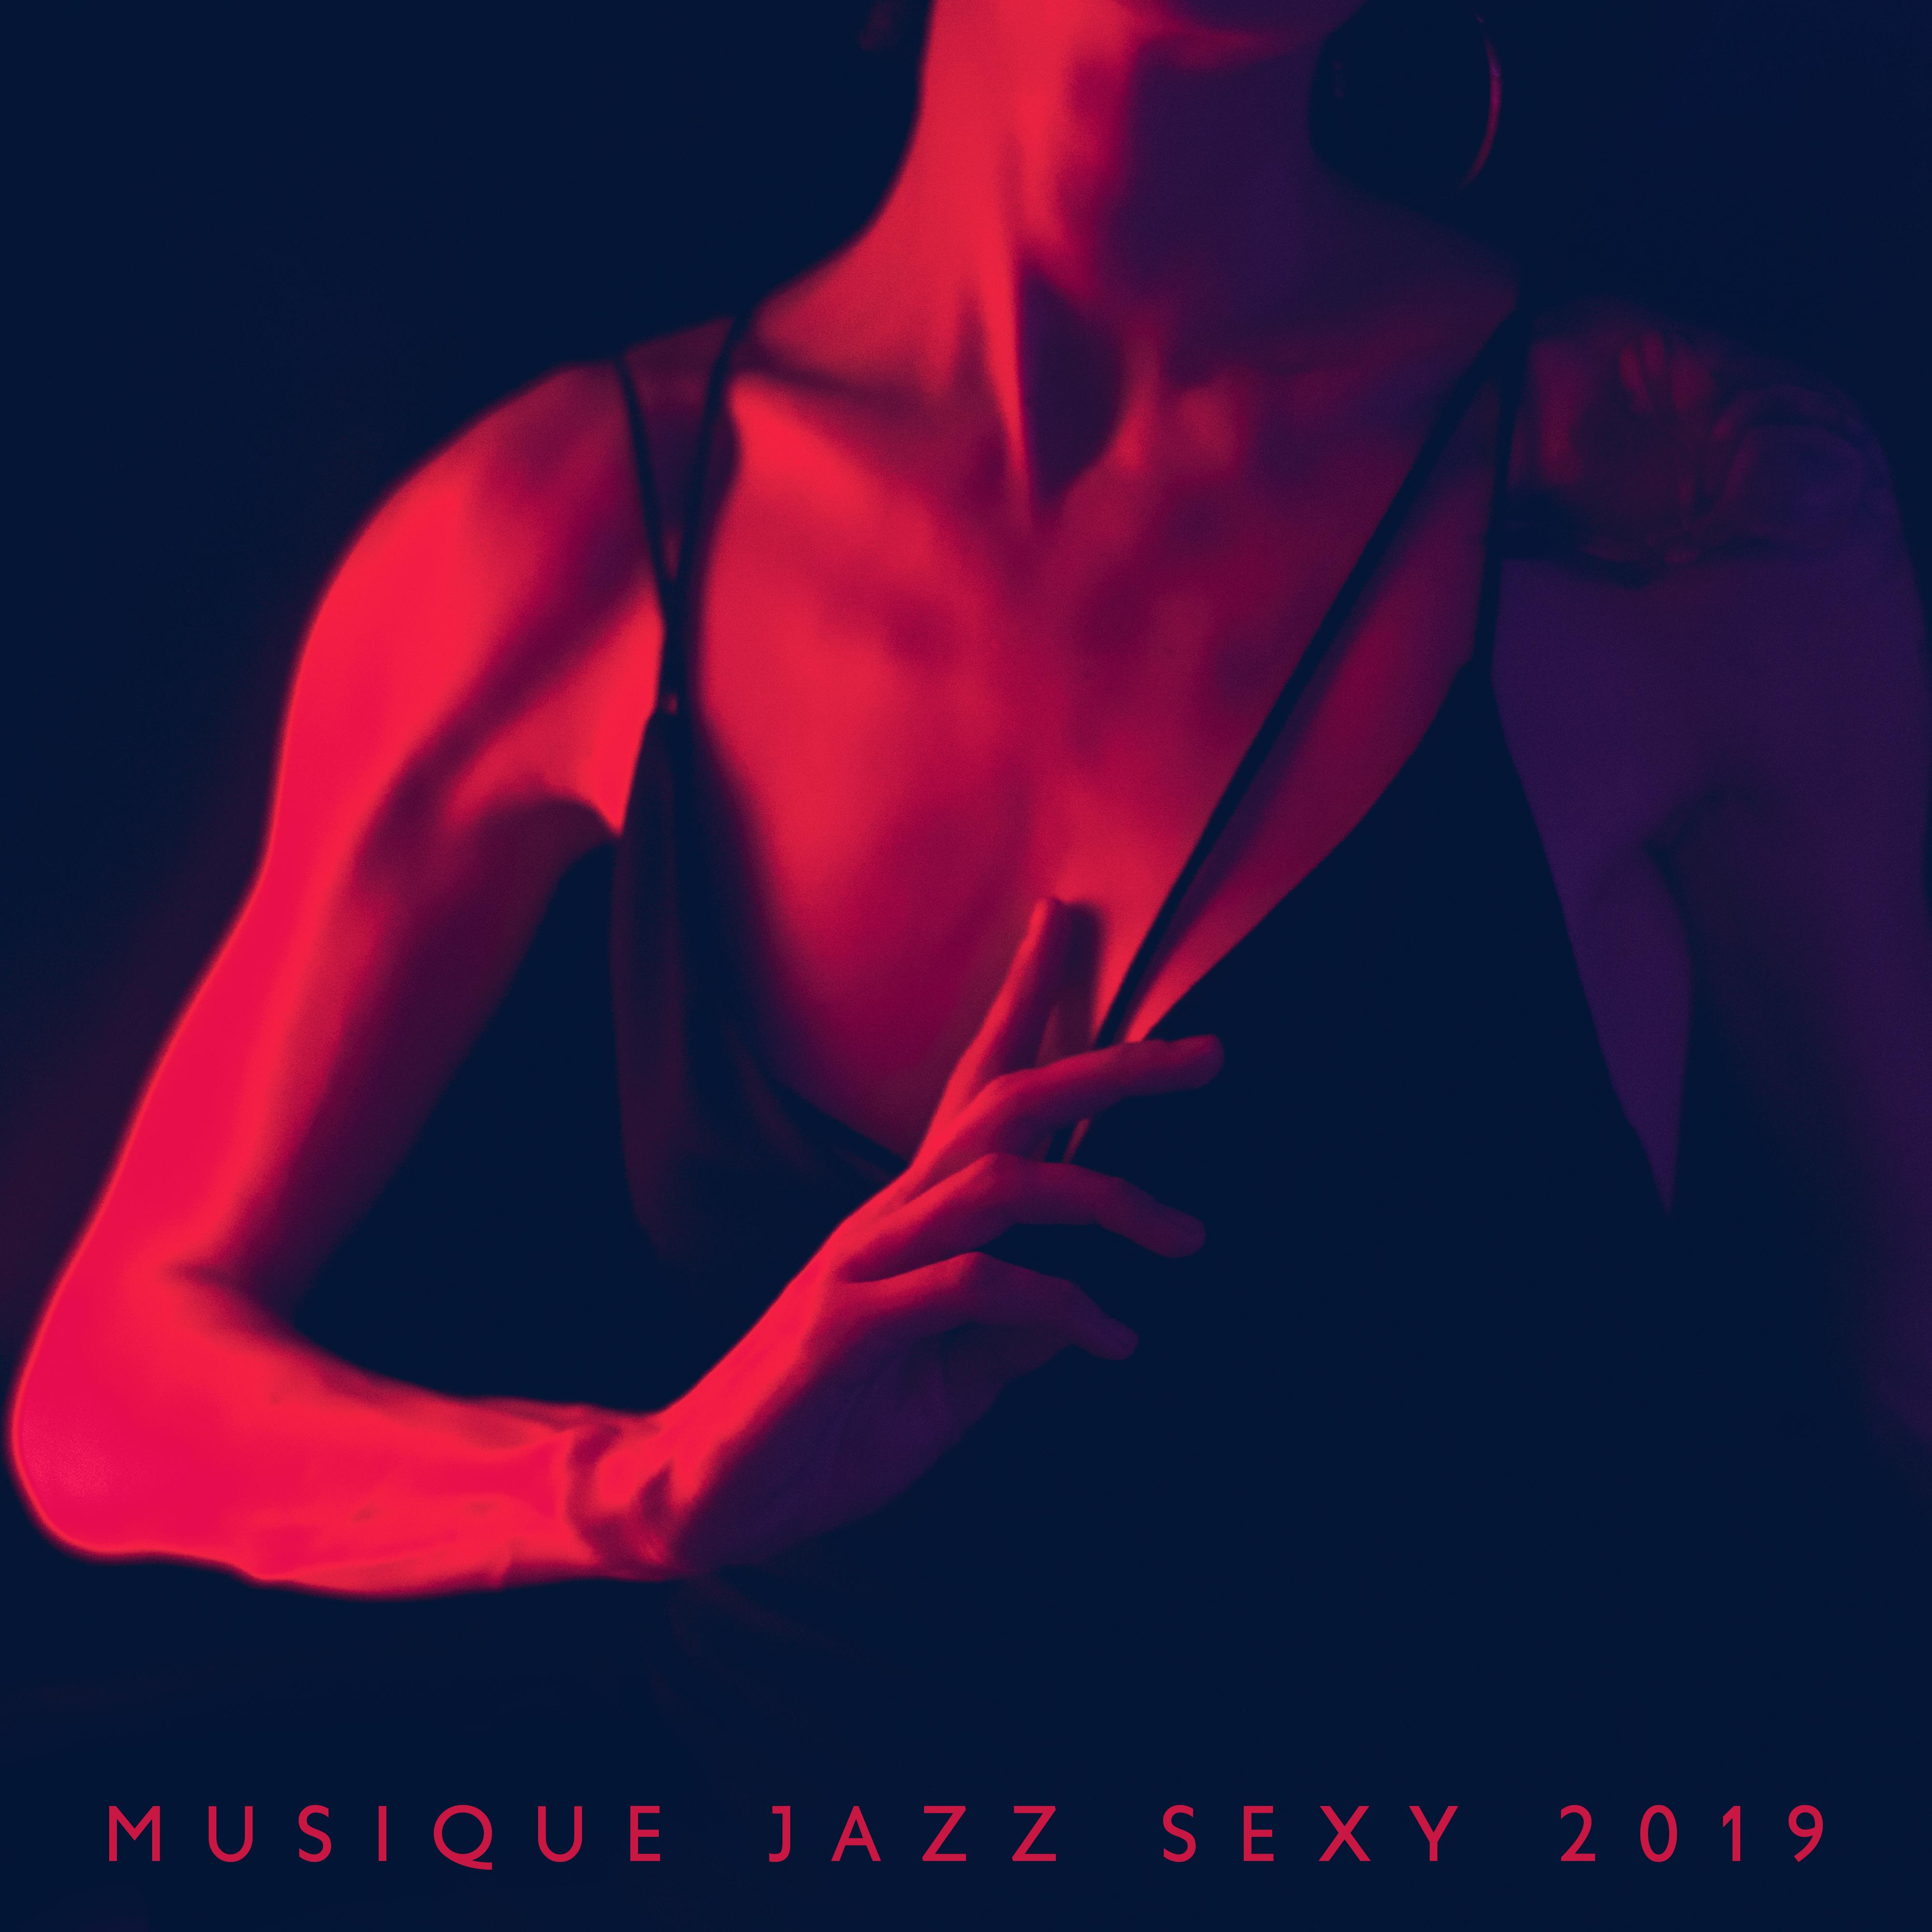 Musique Jazz **** 2019